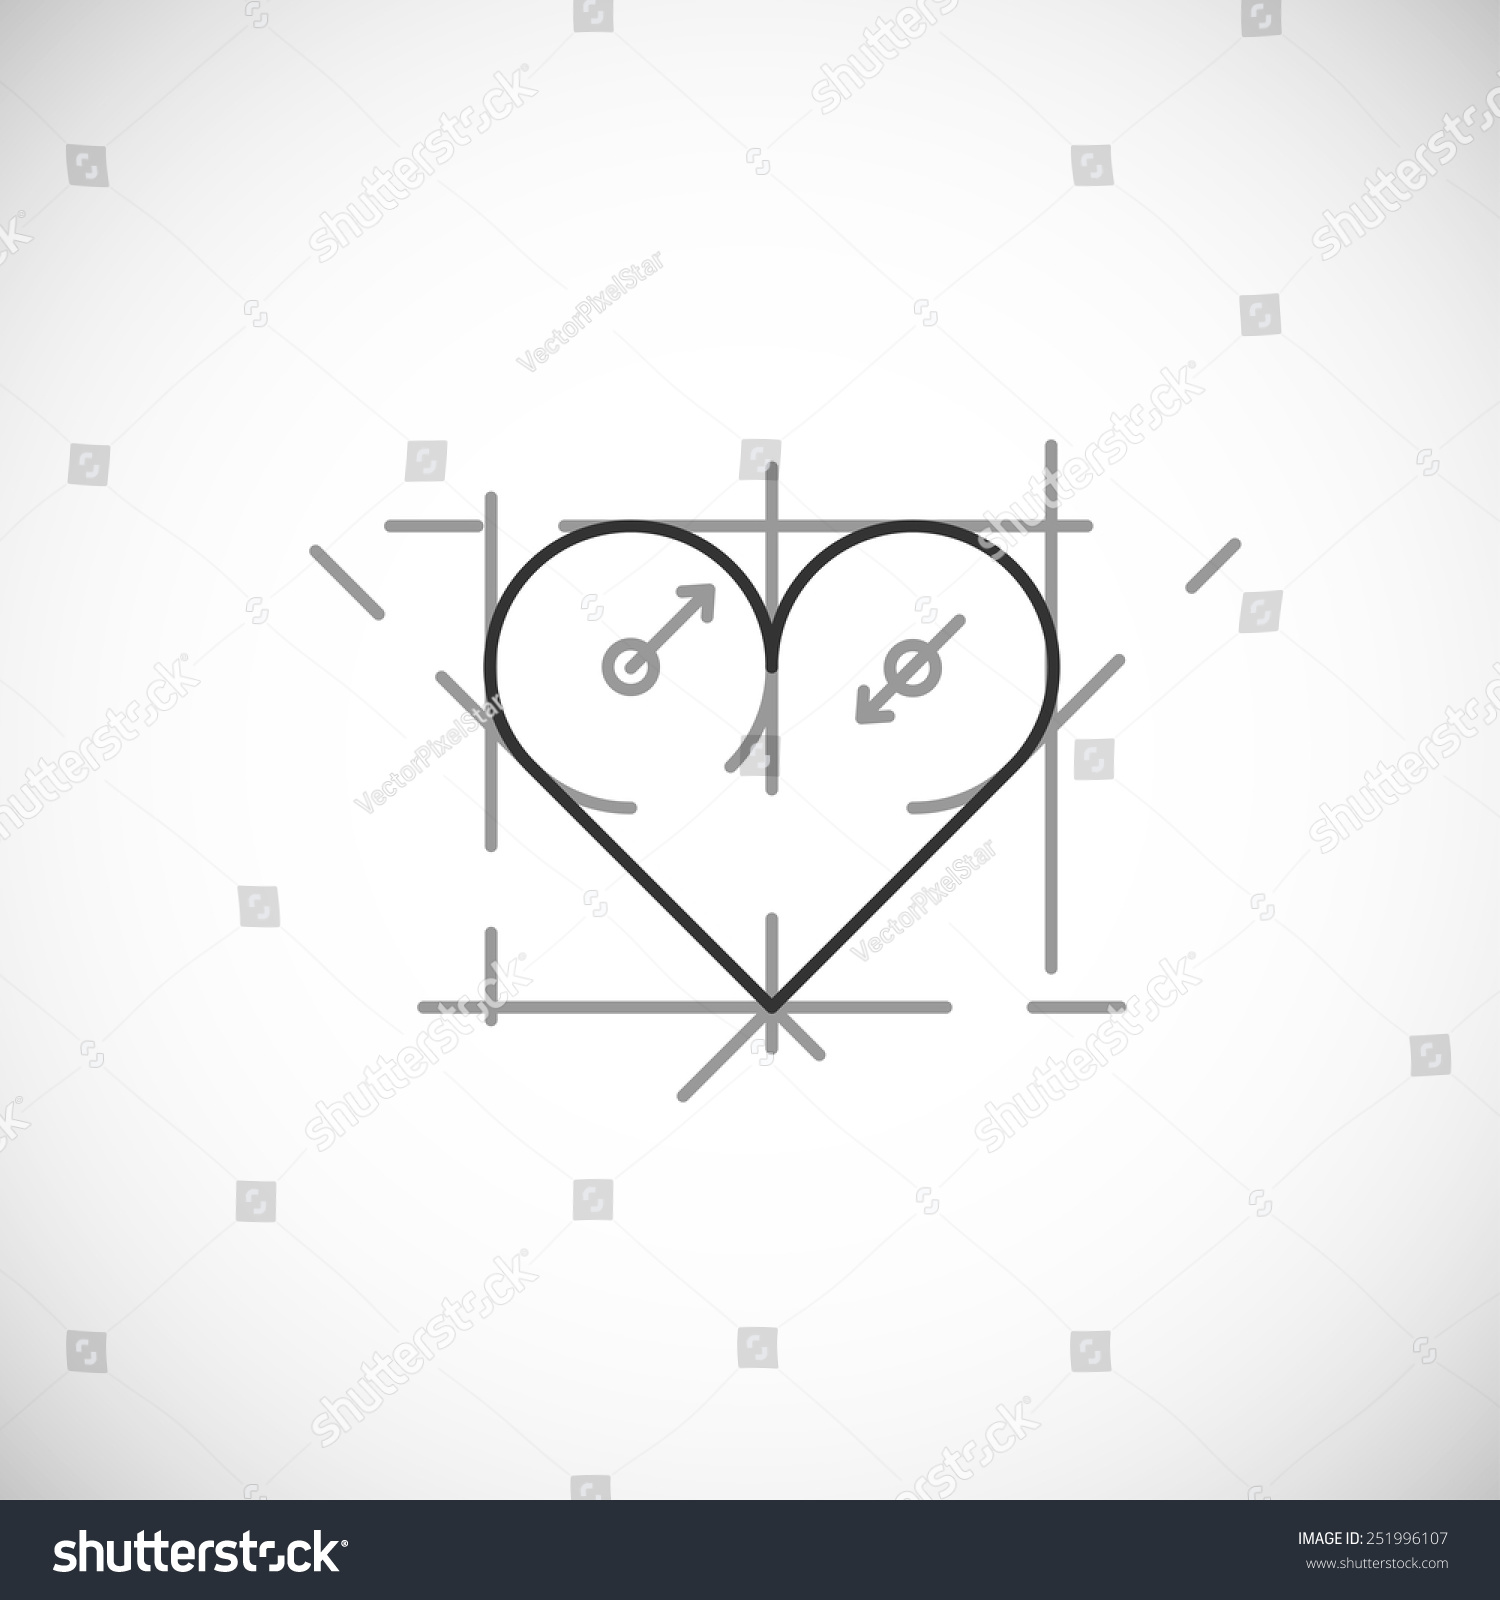 Drawing Heart Figure Stock Vector 251996107 - Shutterstock